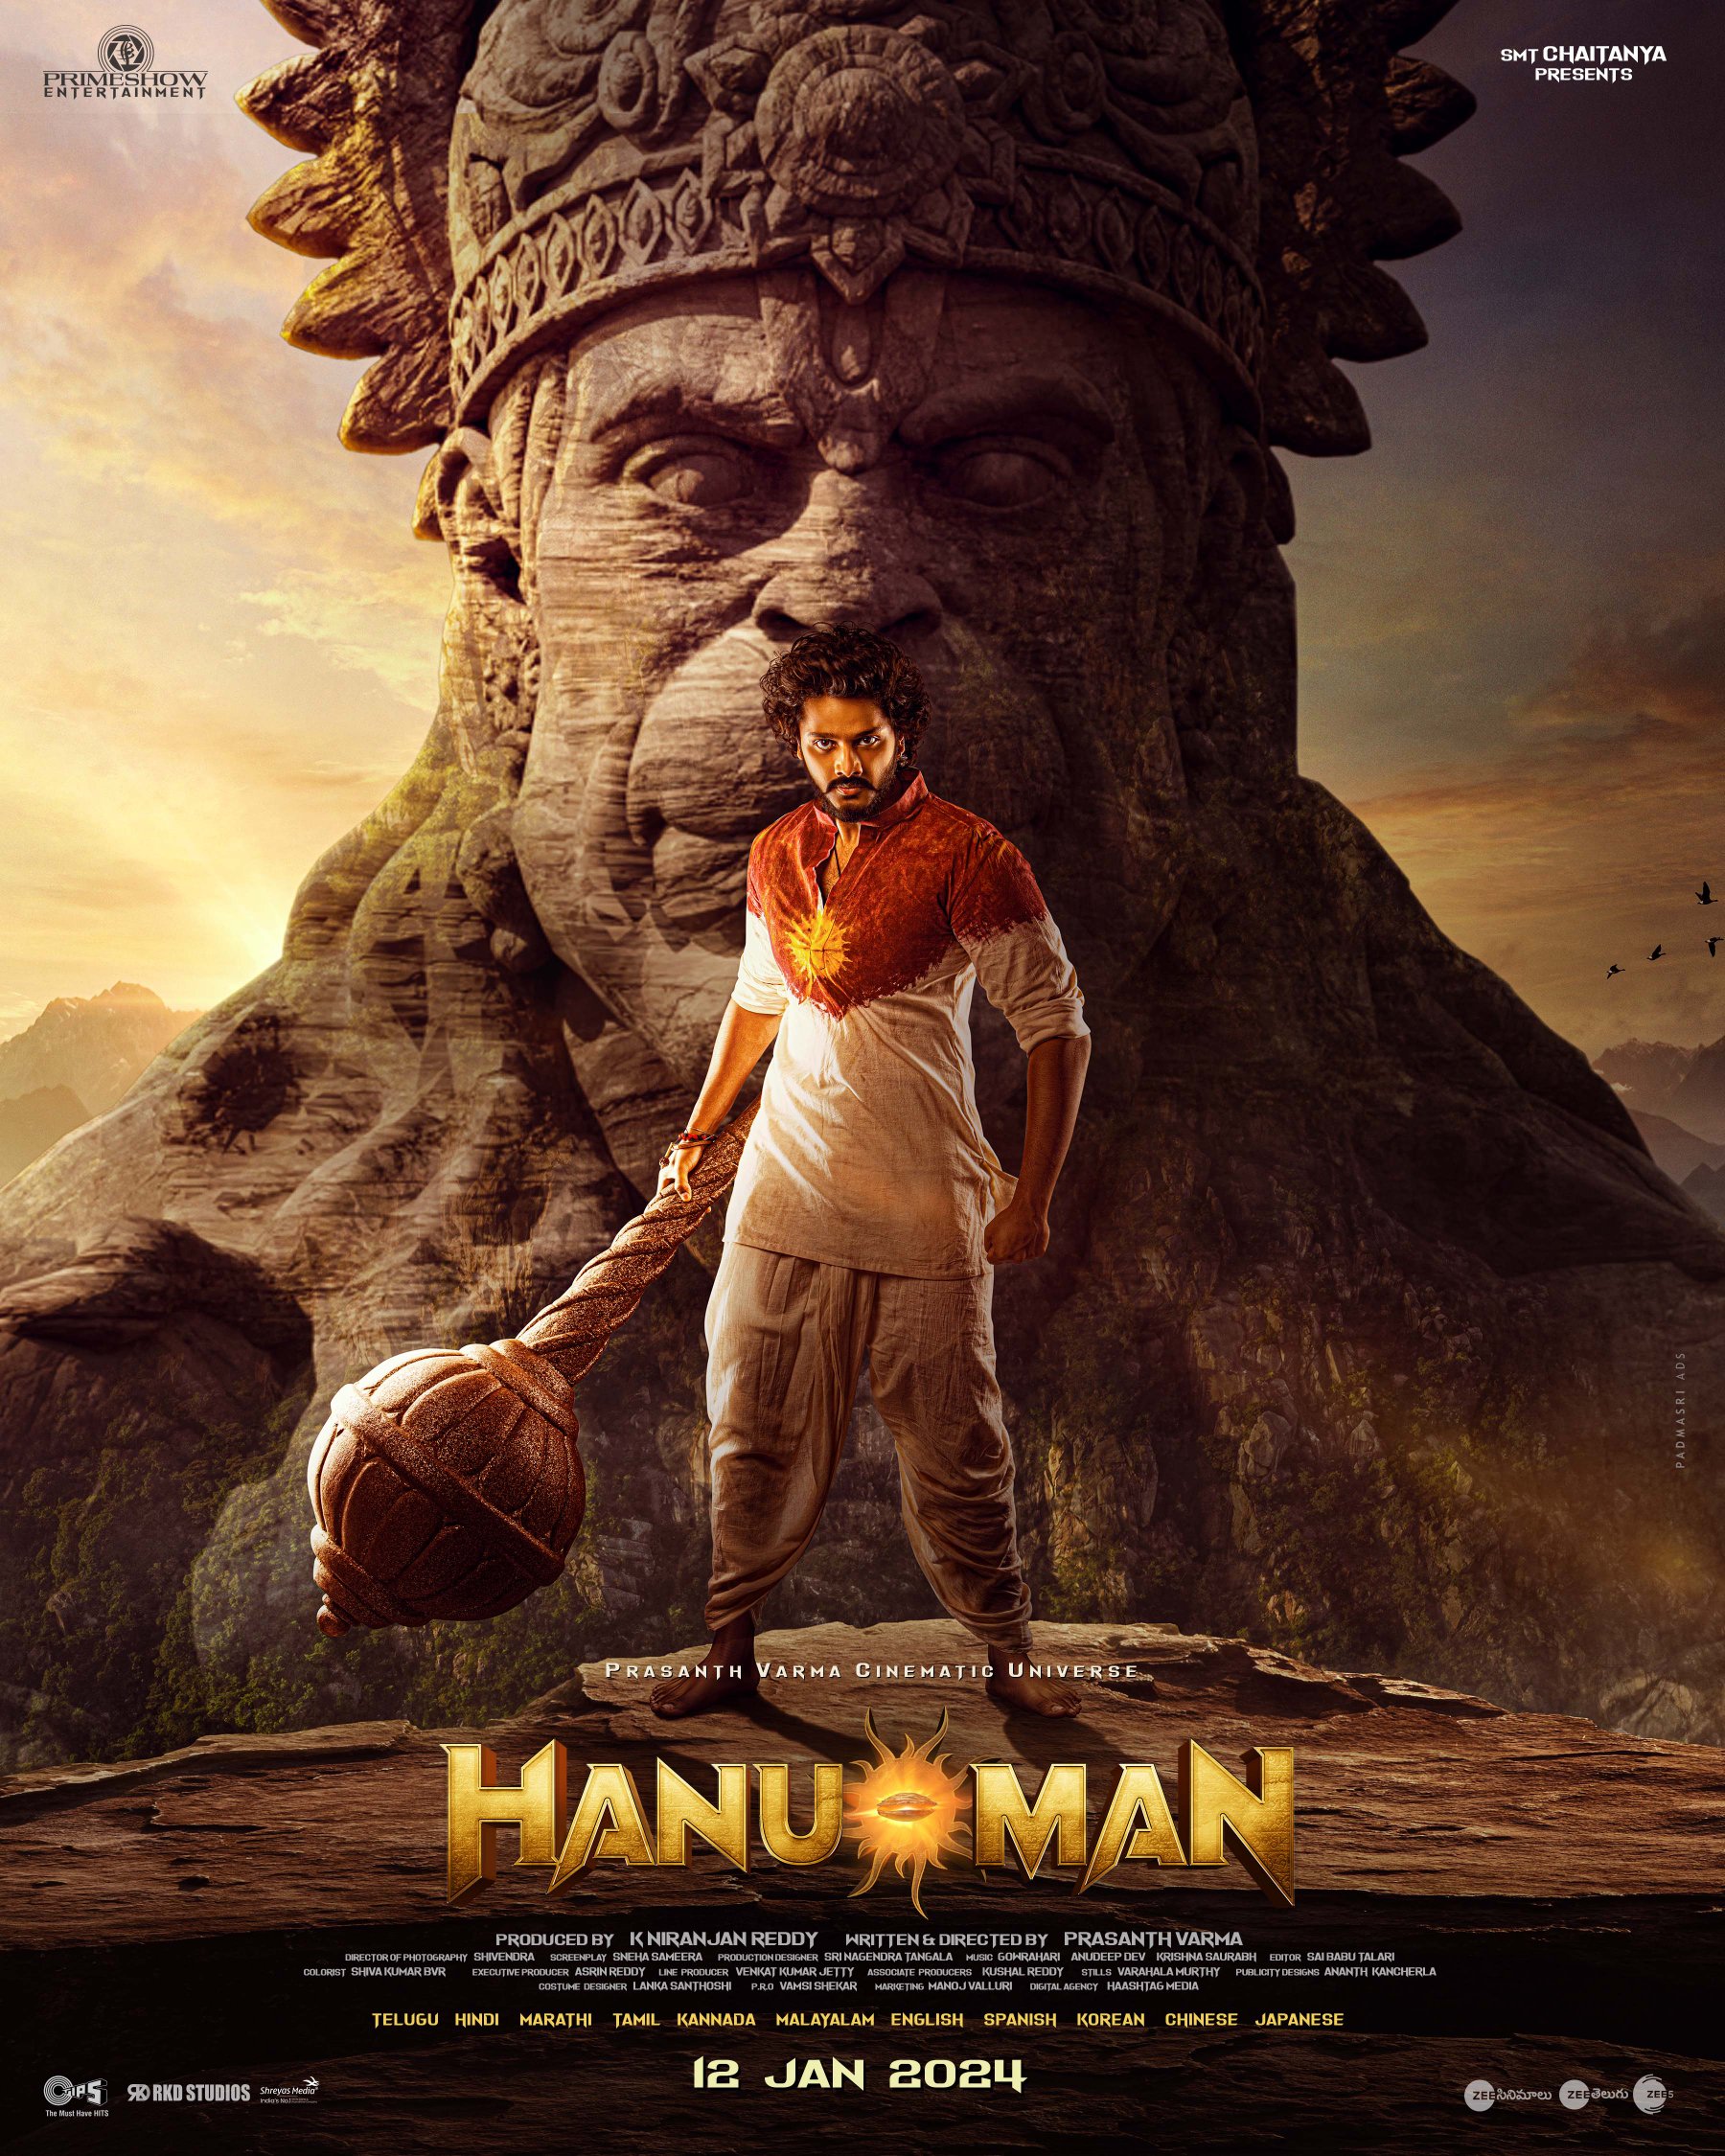 HanuMan Movie 5 Days Share in Both Telugu States